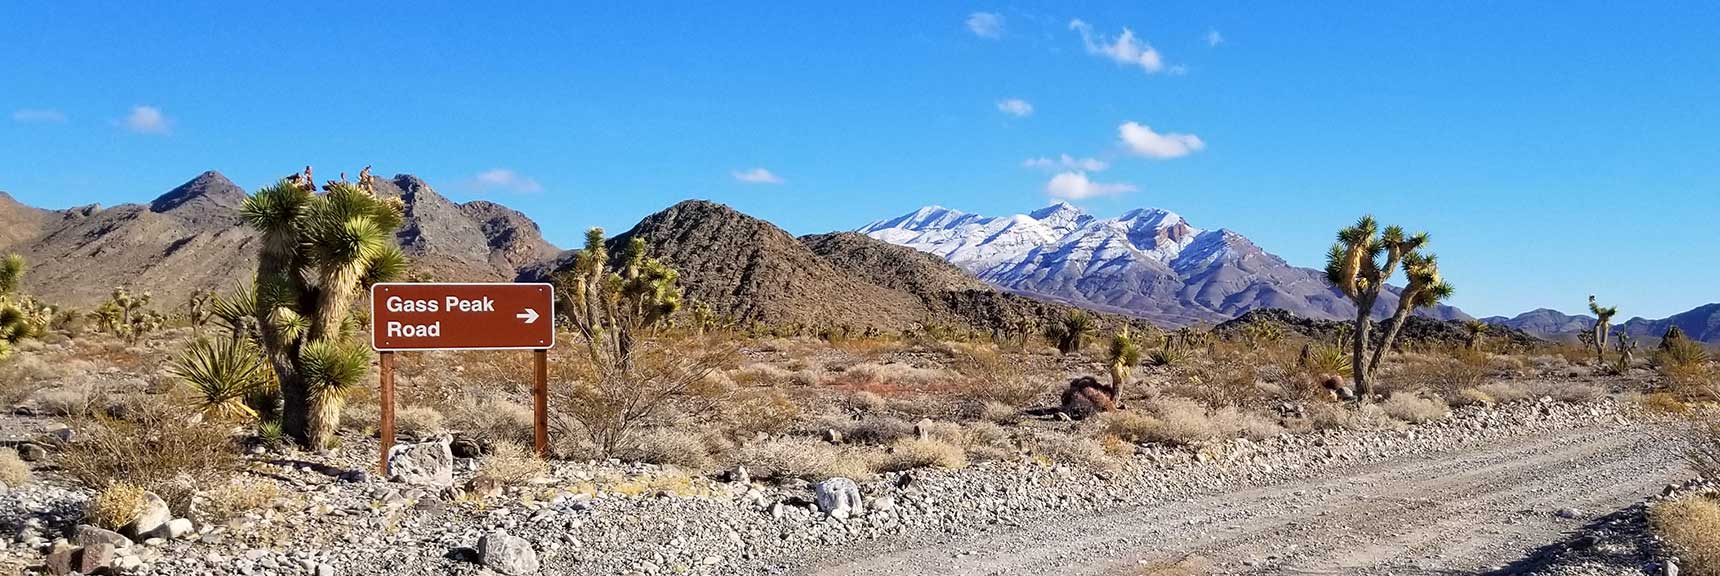 Gass Peak Viewed from Mormon Well Rd, Desert National Wildlife Refuge, Nevada